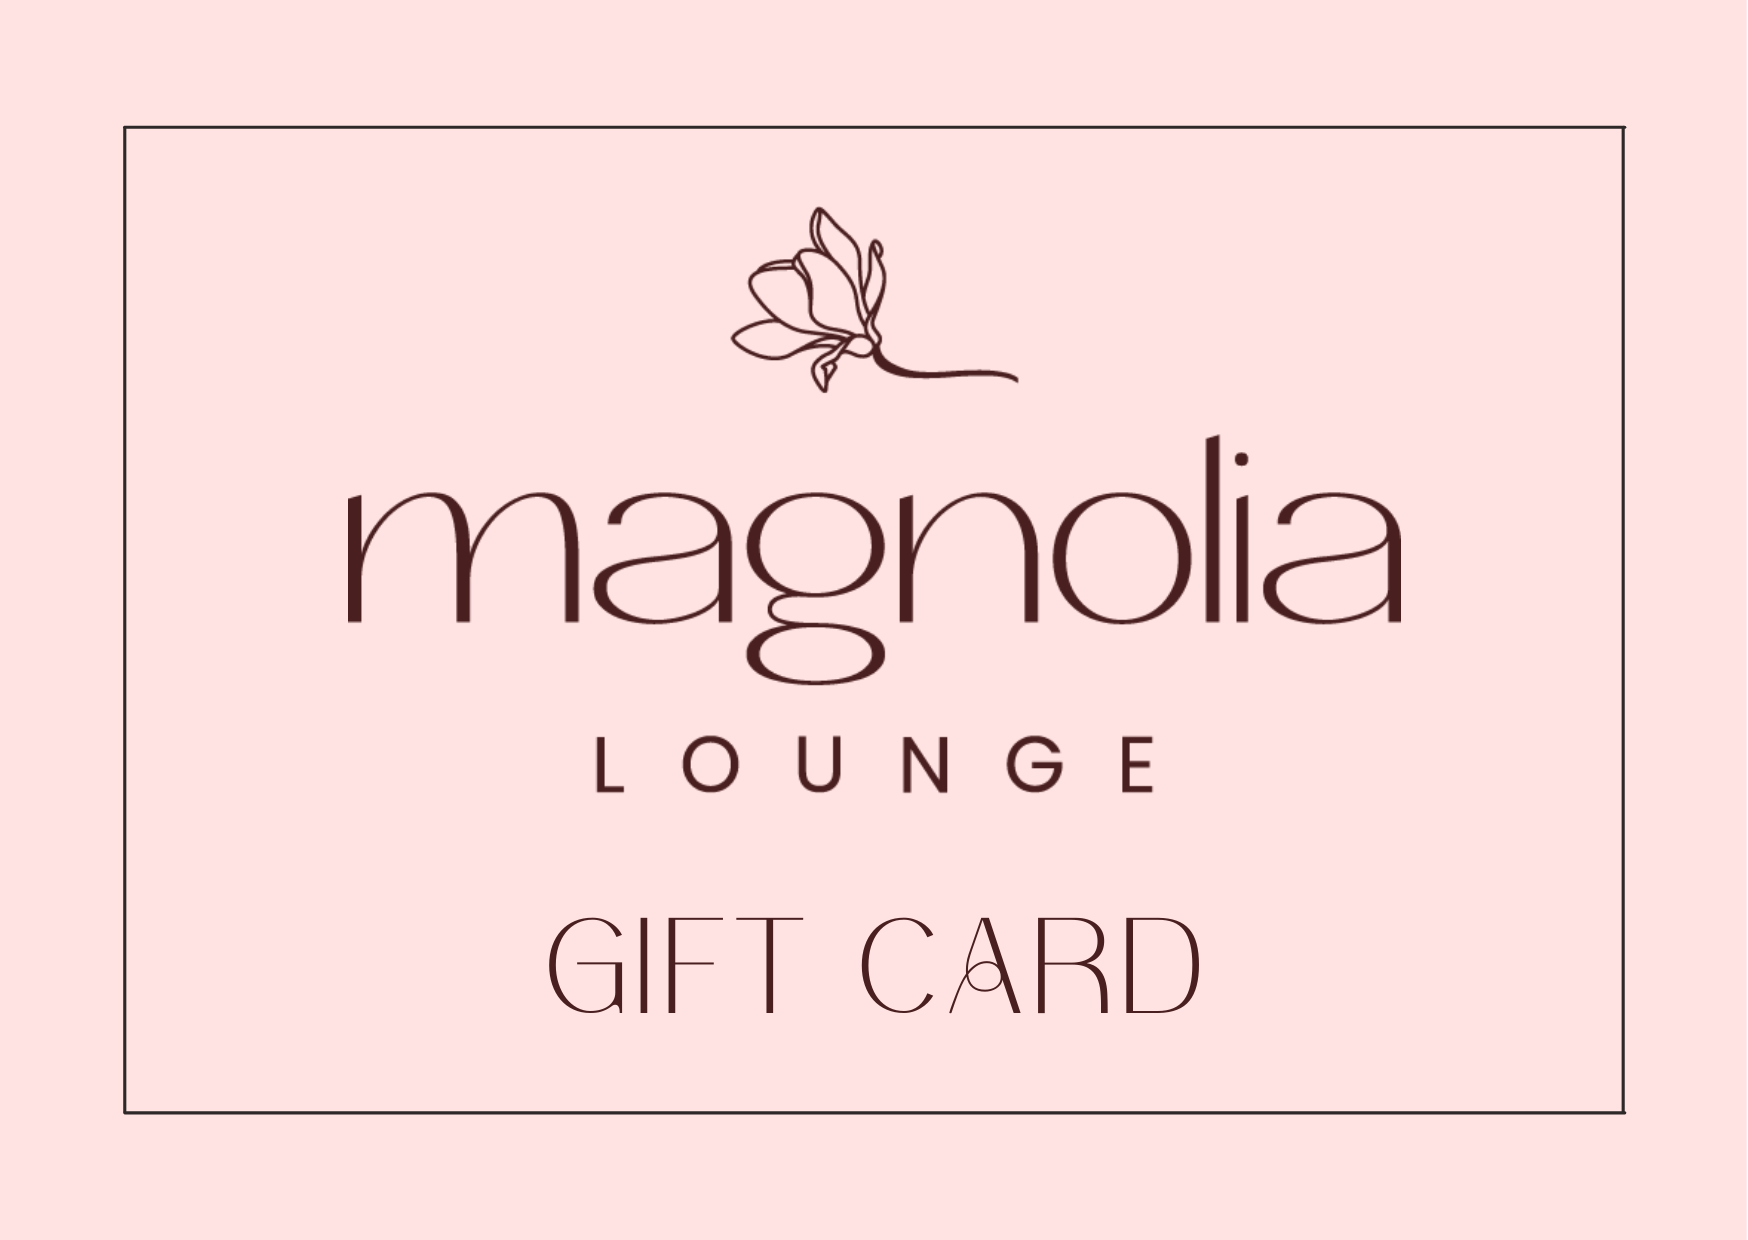 eGift Card Magnolia Lounge